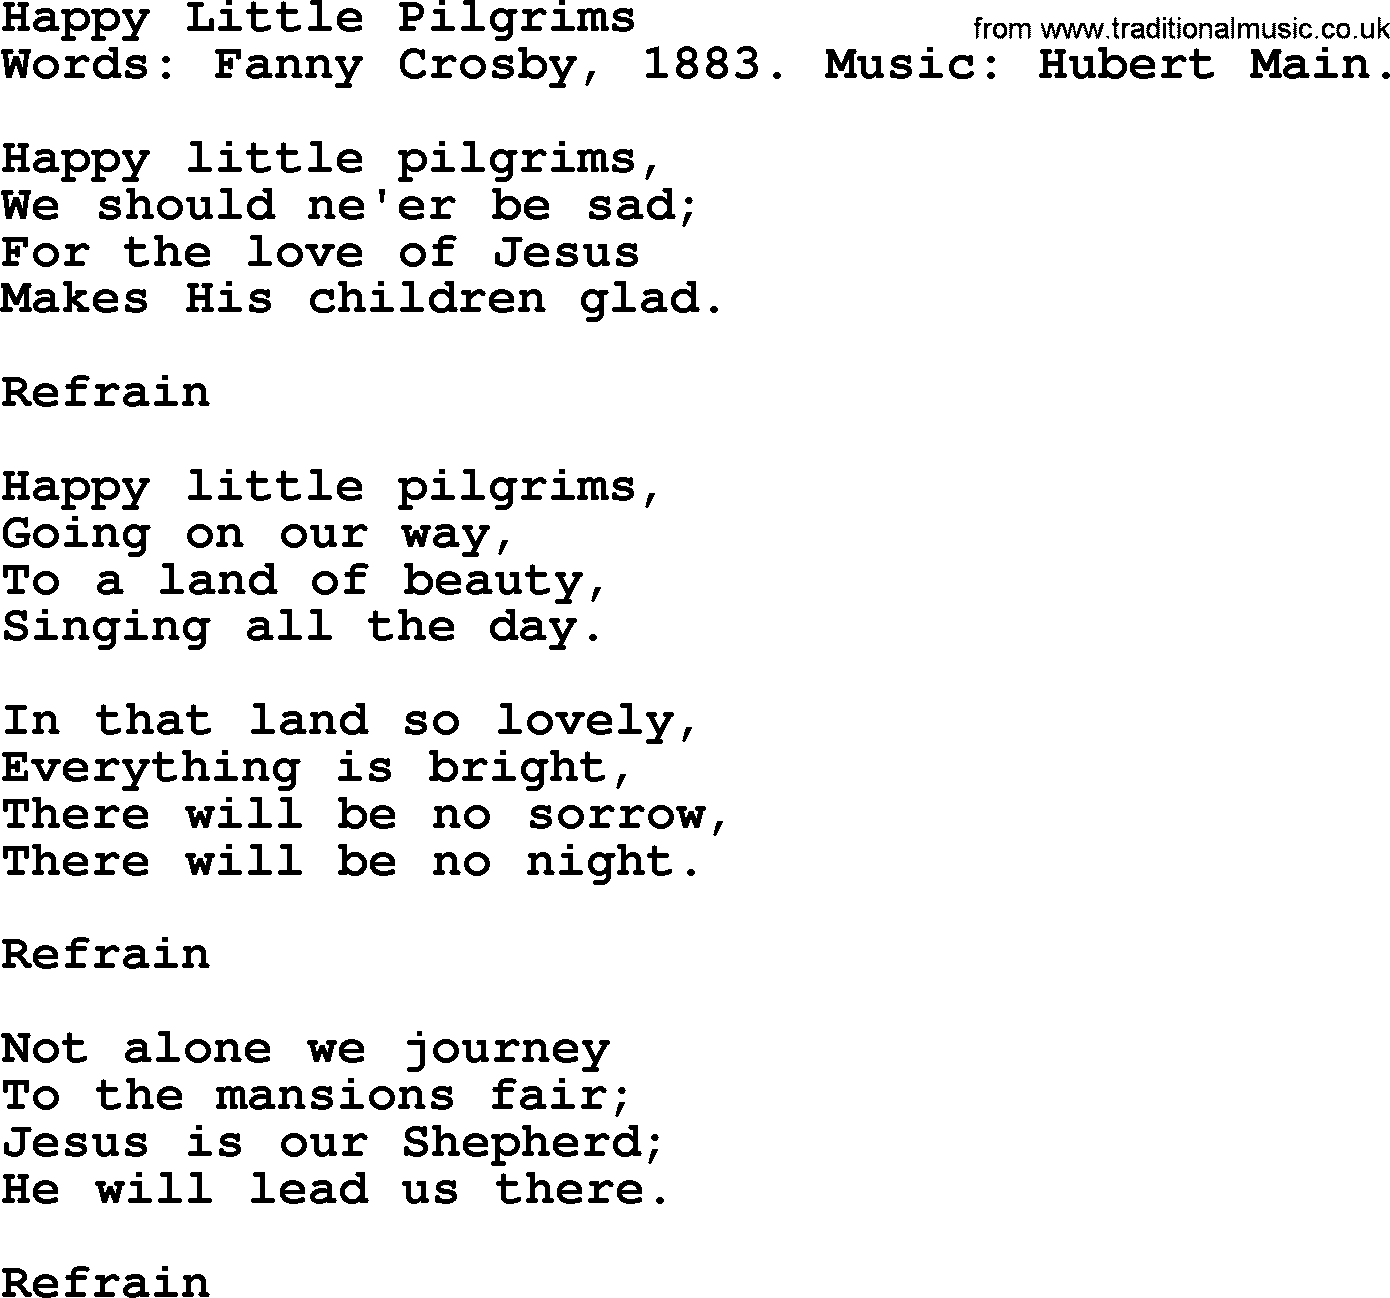 Fanny Crosby song: Happy Little Pilgrims, lyrics